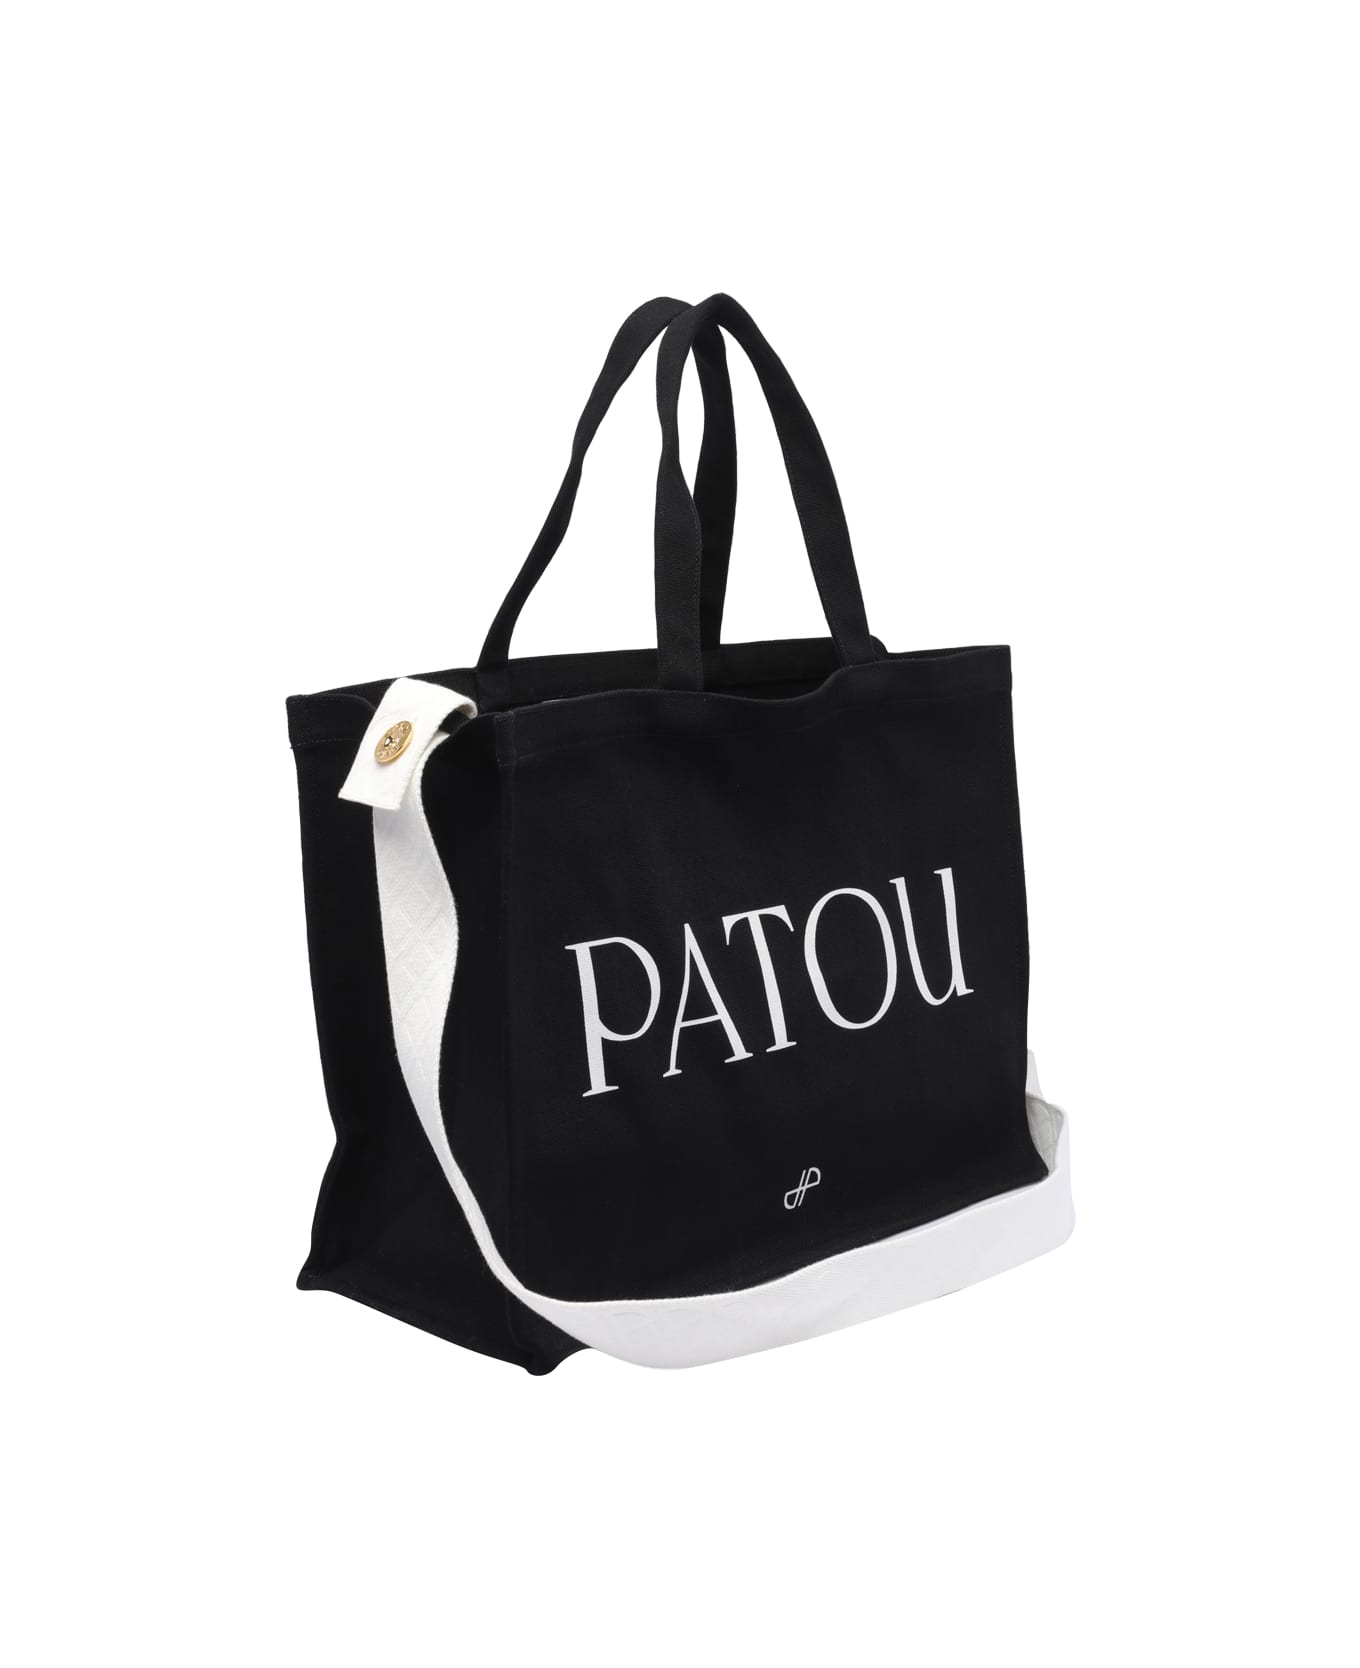 Patou Large Logo Tote Bag - Black